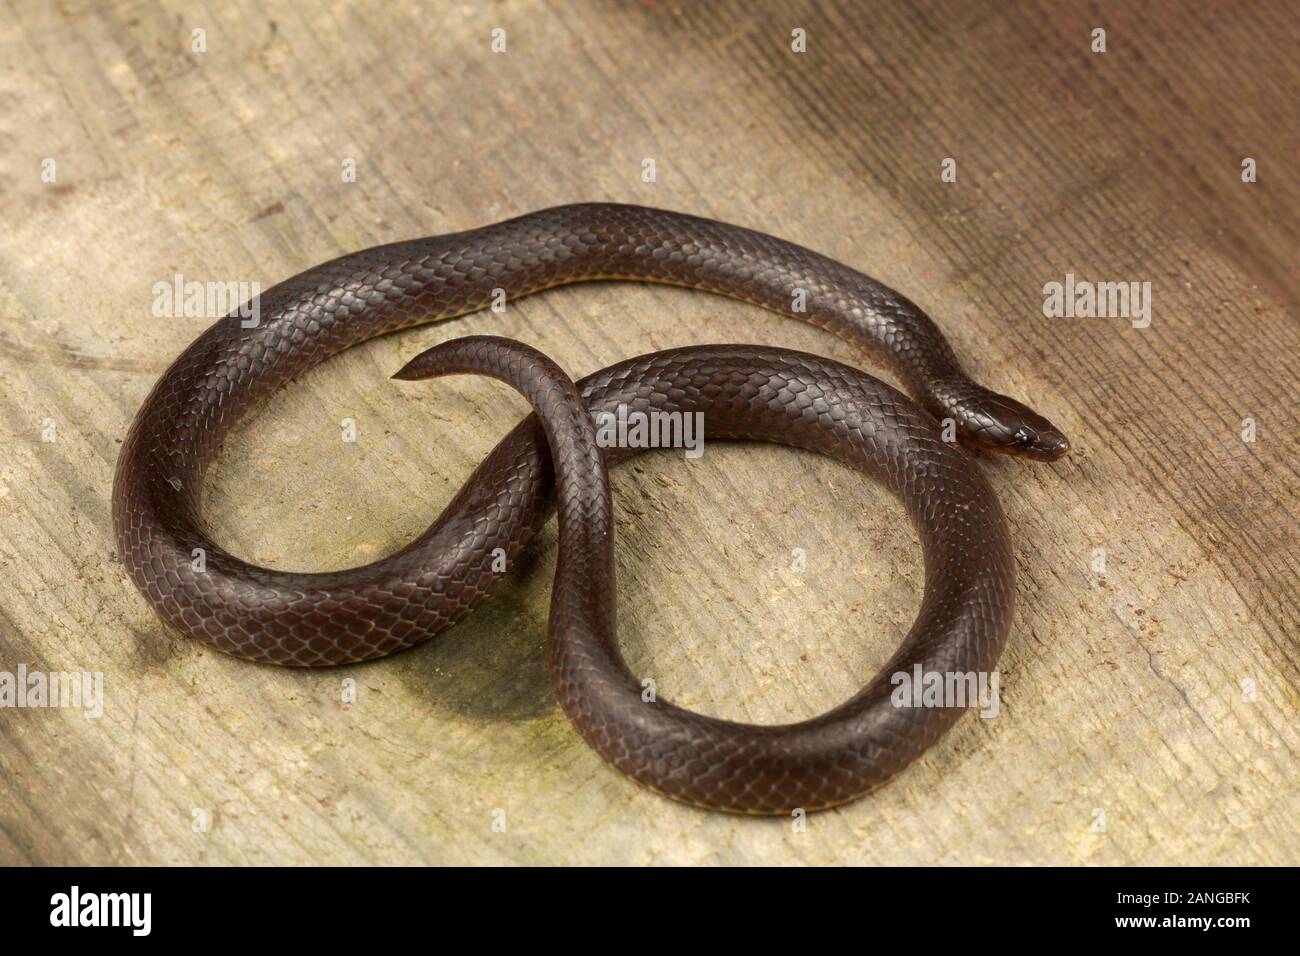 Trachischium slender snakes or worm-eating snakes,  subfamily Natricinae family Colubridae. Endemic to Asia. Stock Photo